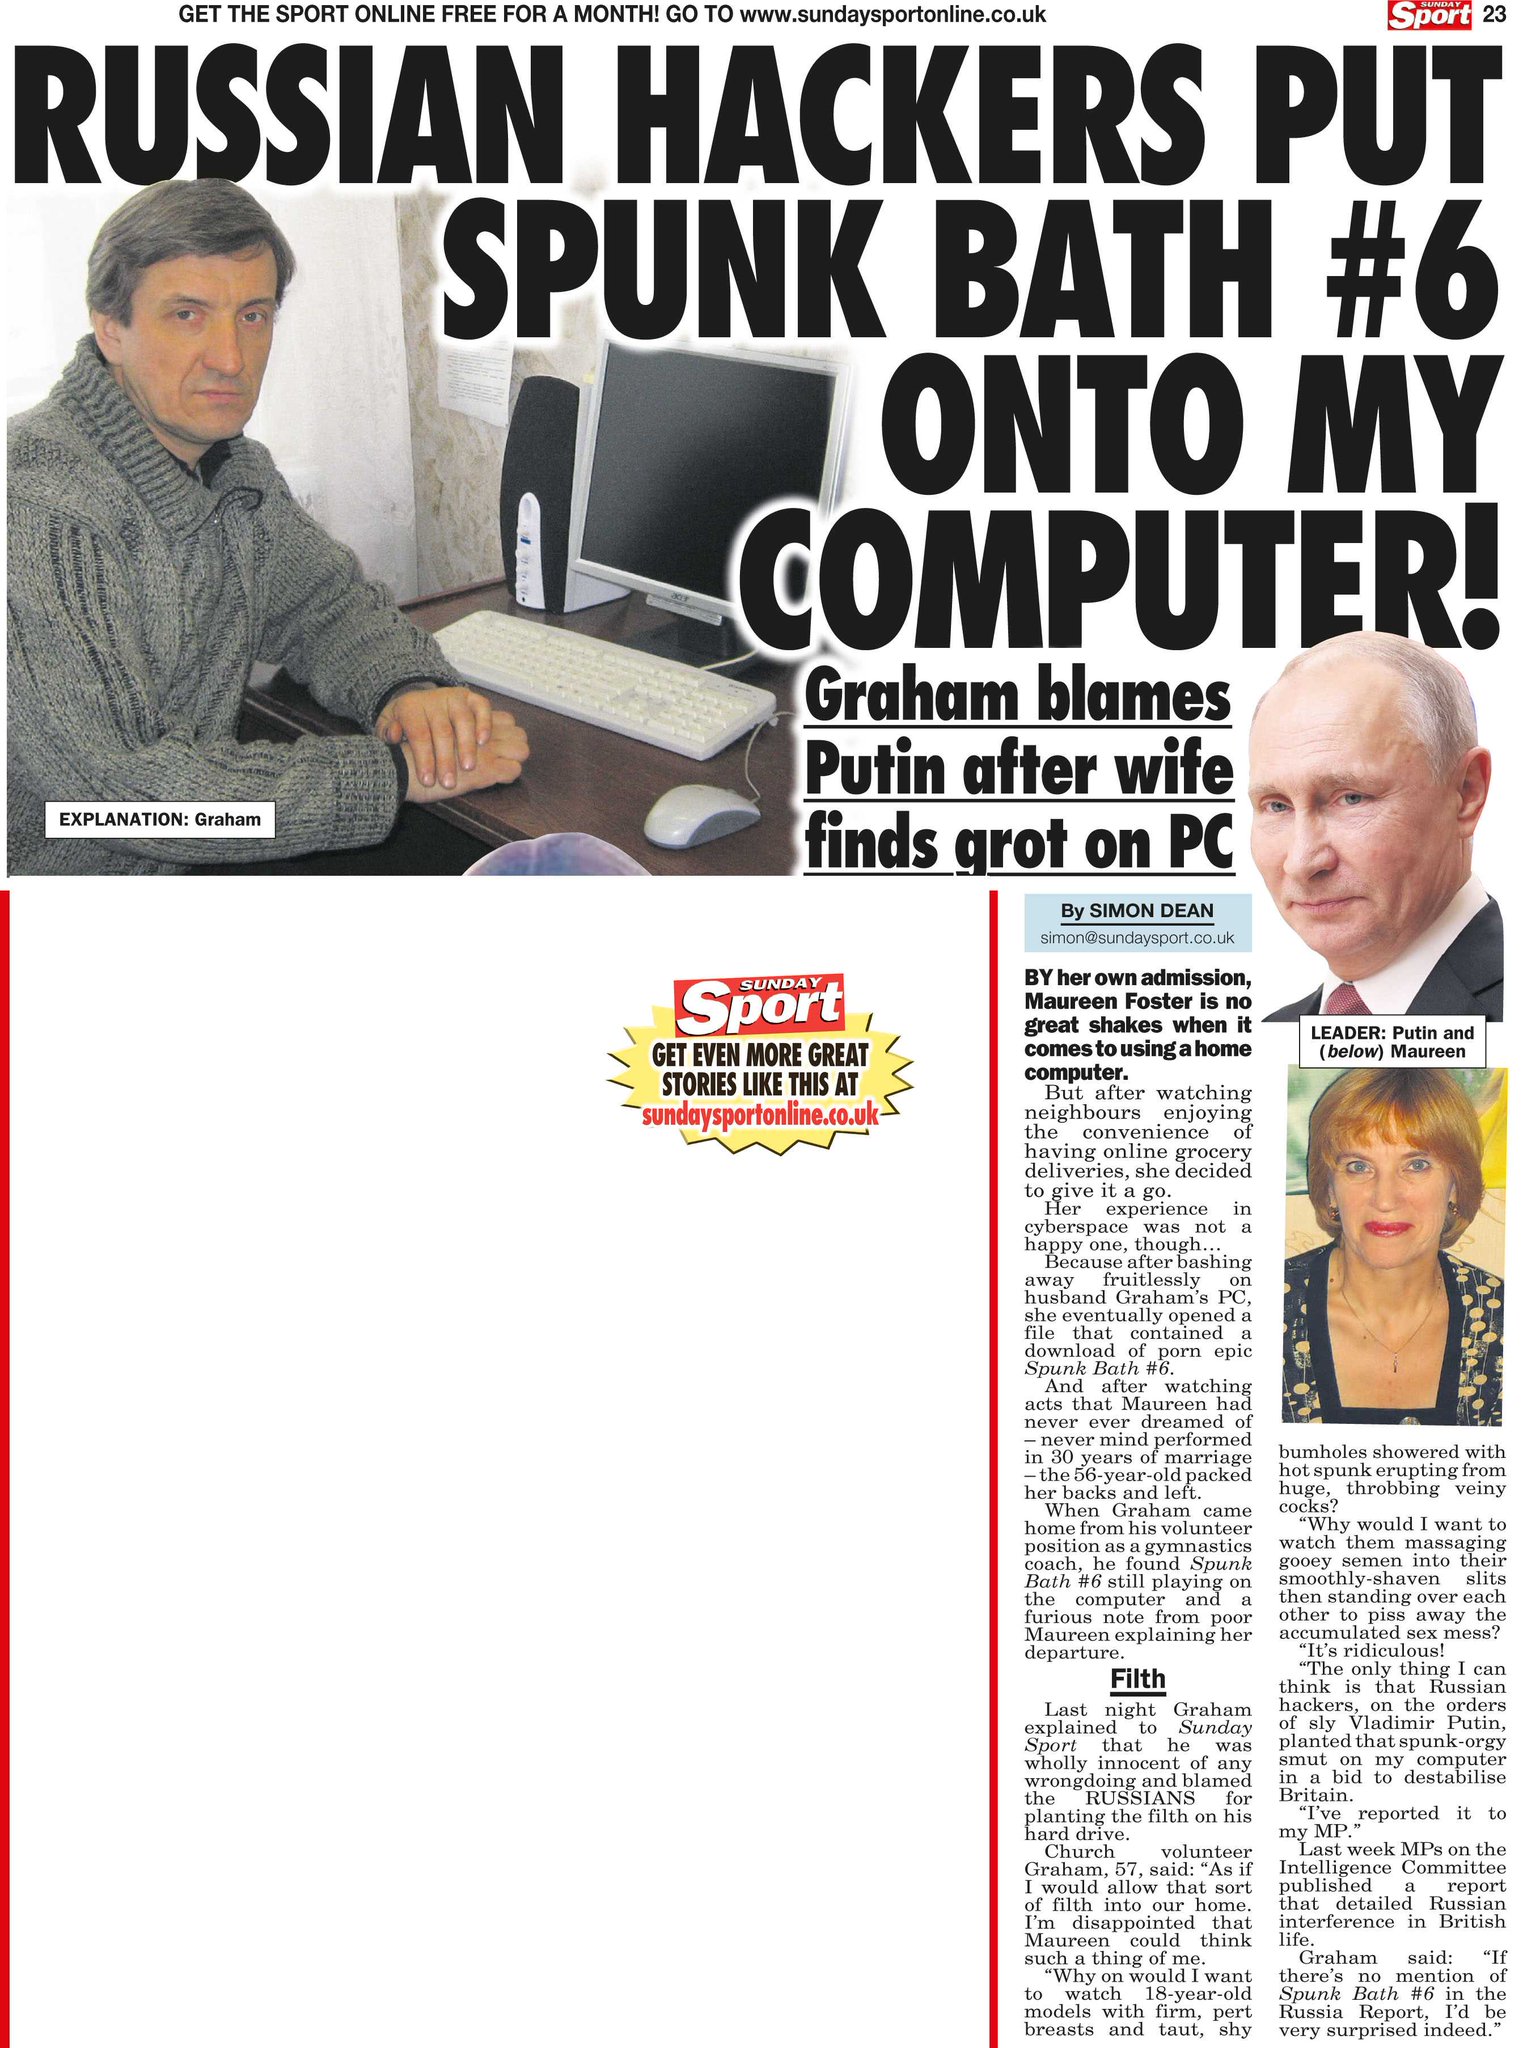 توییتر/ Sunday Sport در توییتر «Russian hackers put Spunk Bath #6 on my PC! Only in Sunday Sport on Sunday picture